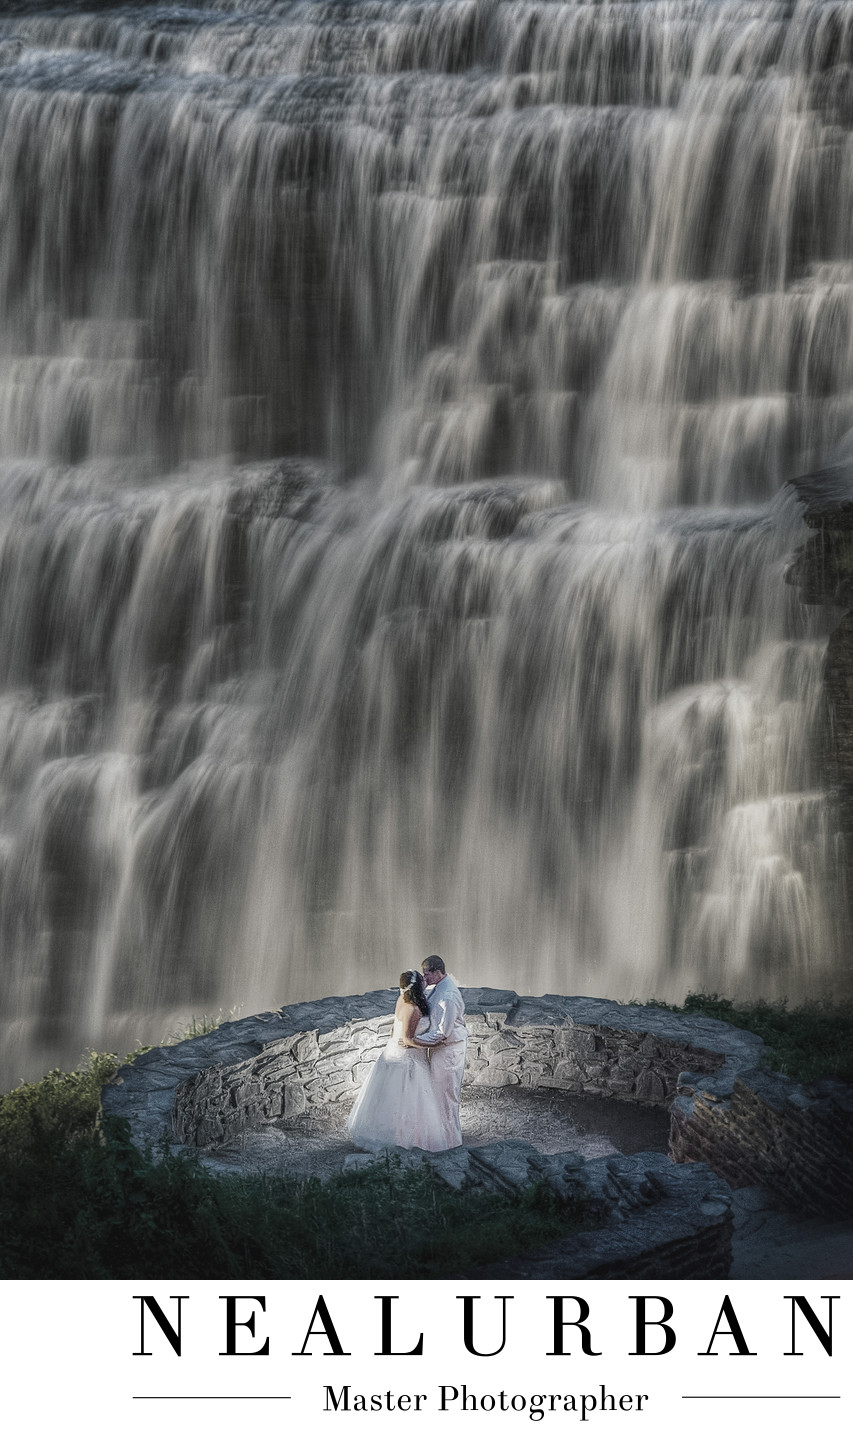 letchworth waterfall wedding photography location at night